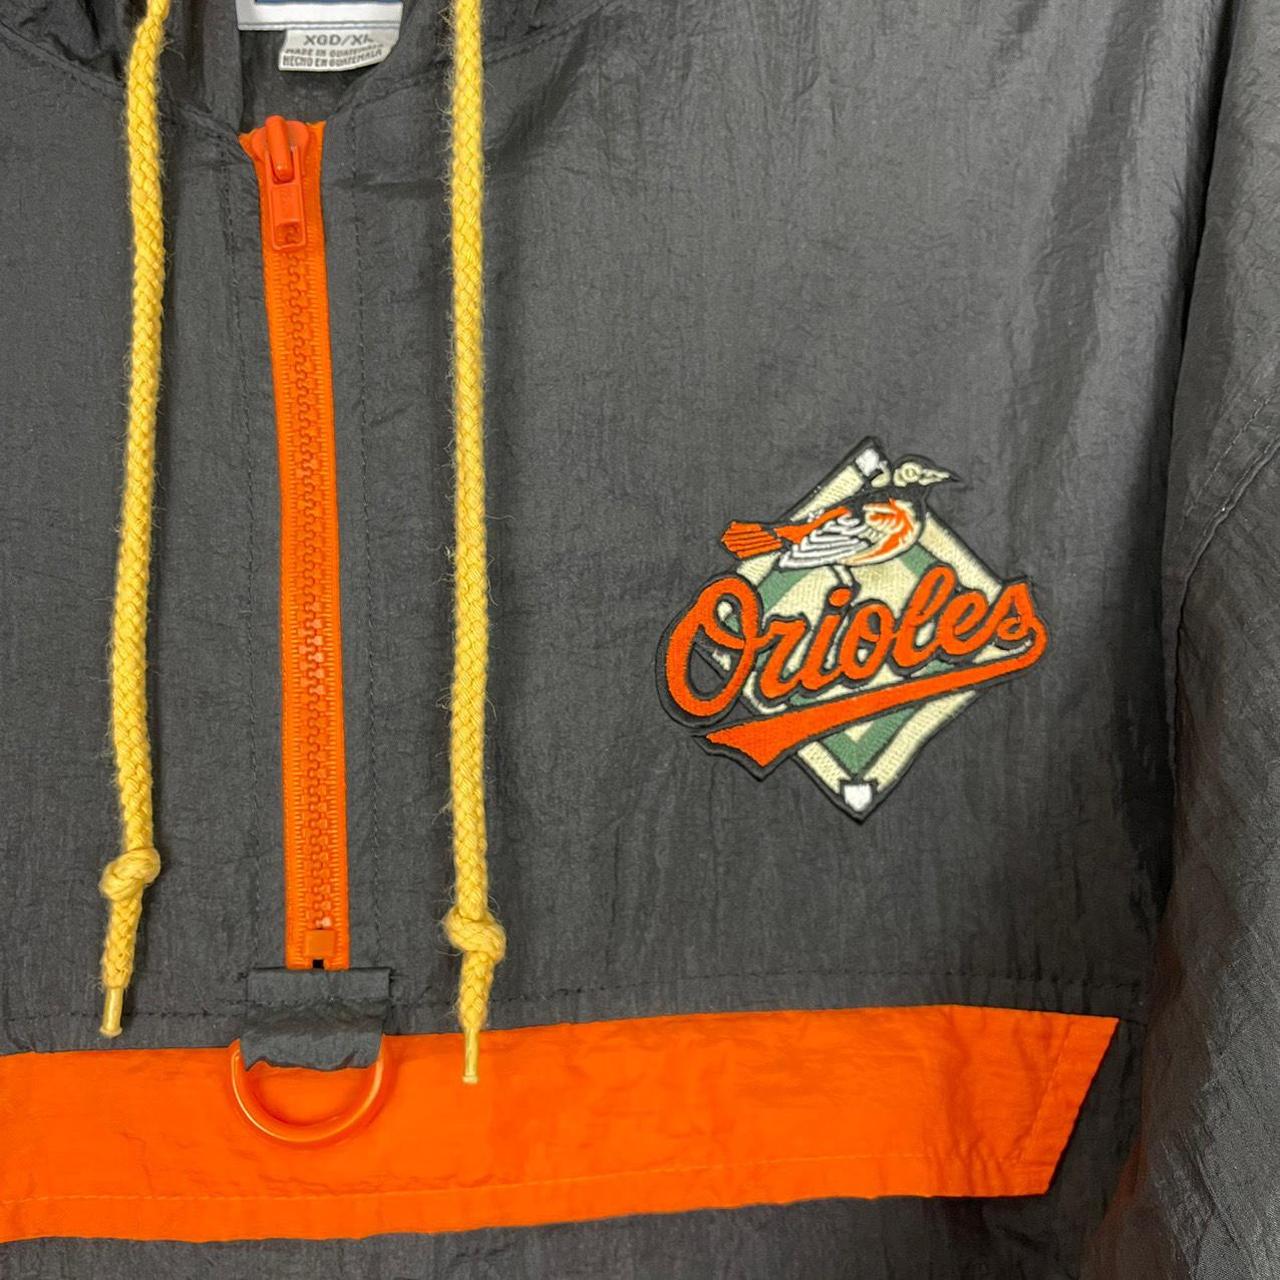 American Vintage Men's Black and Orange Jacket (3)